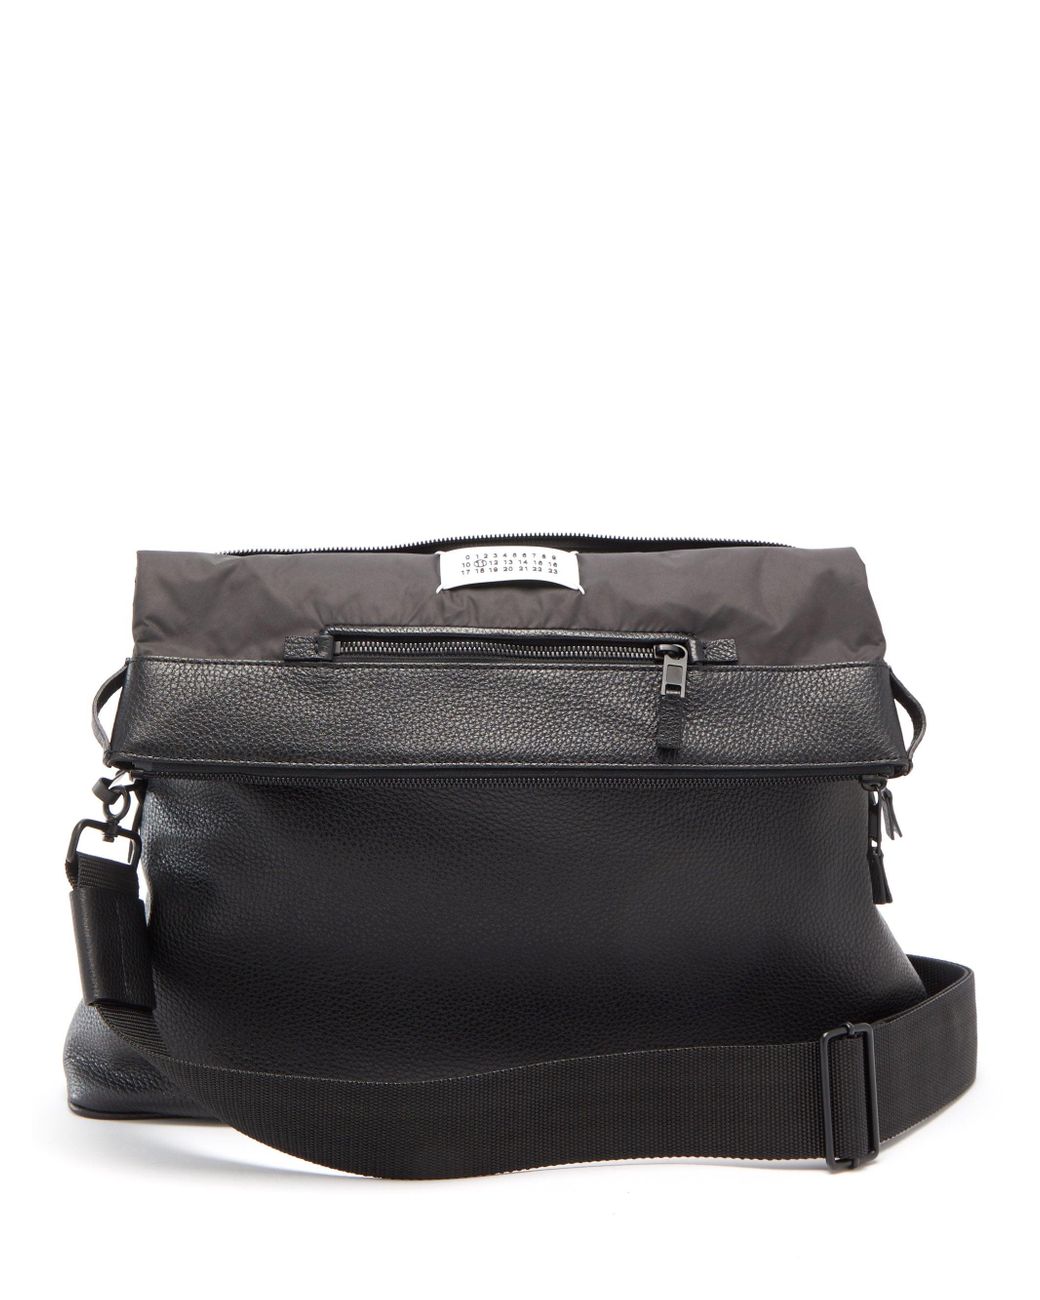 Maison Margiela 5ac Grained-leather Cross-body Bag in Black for Men - Lyst